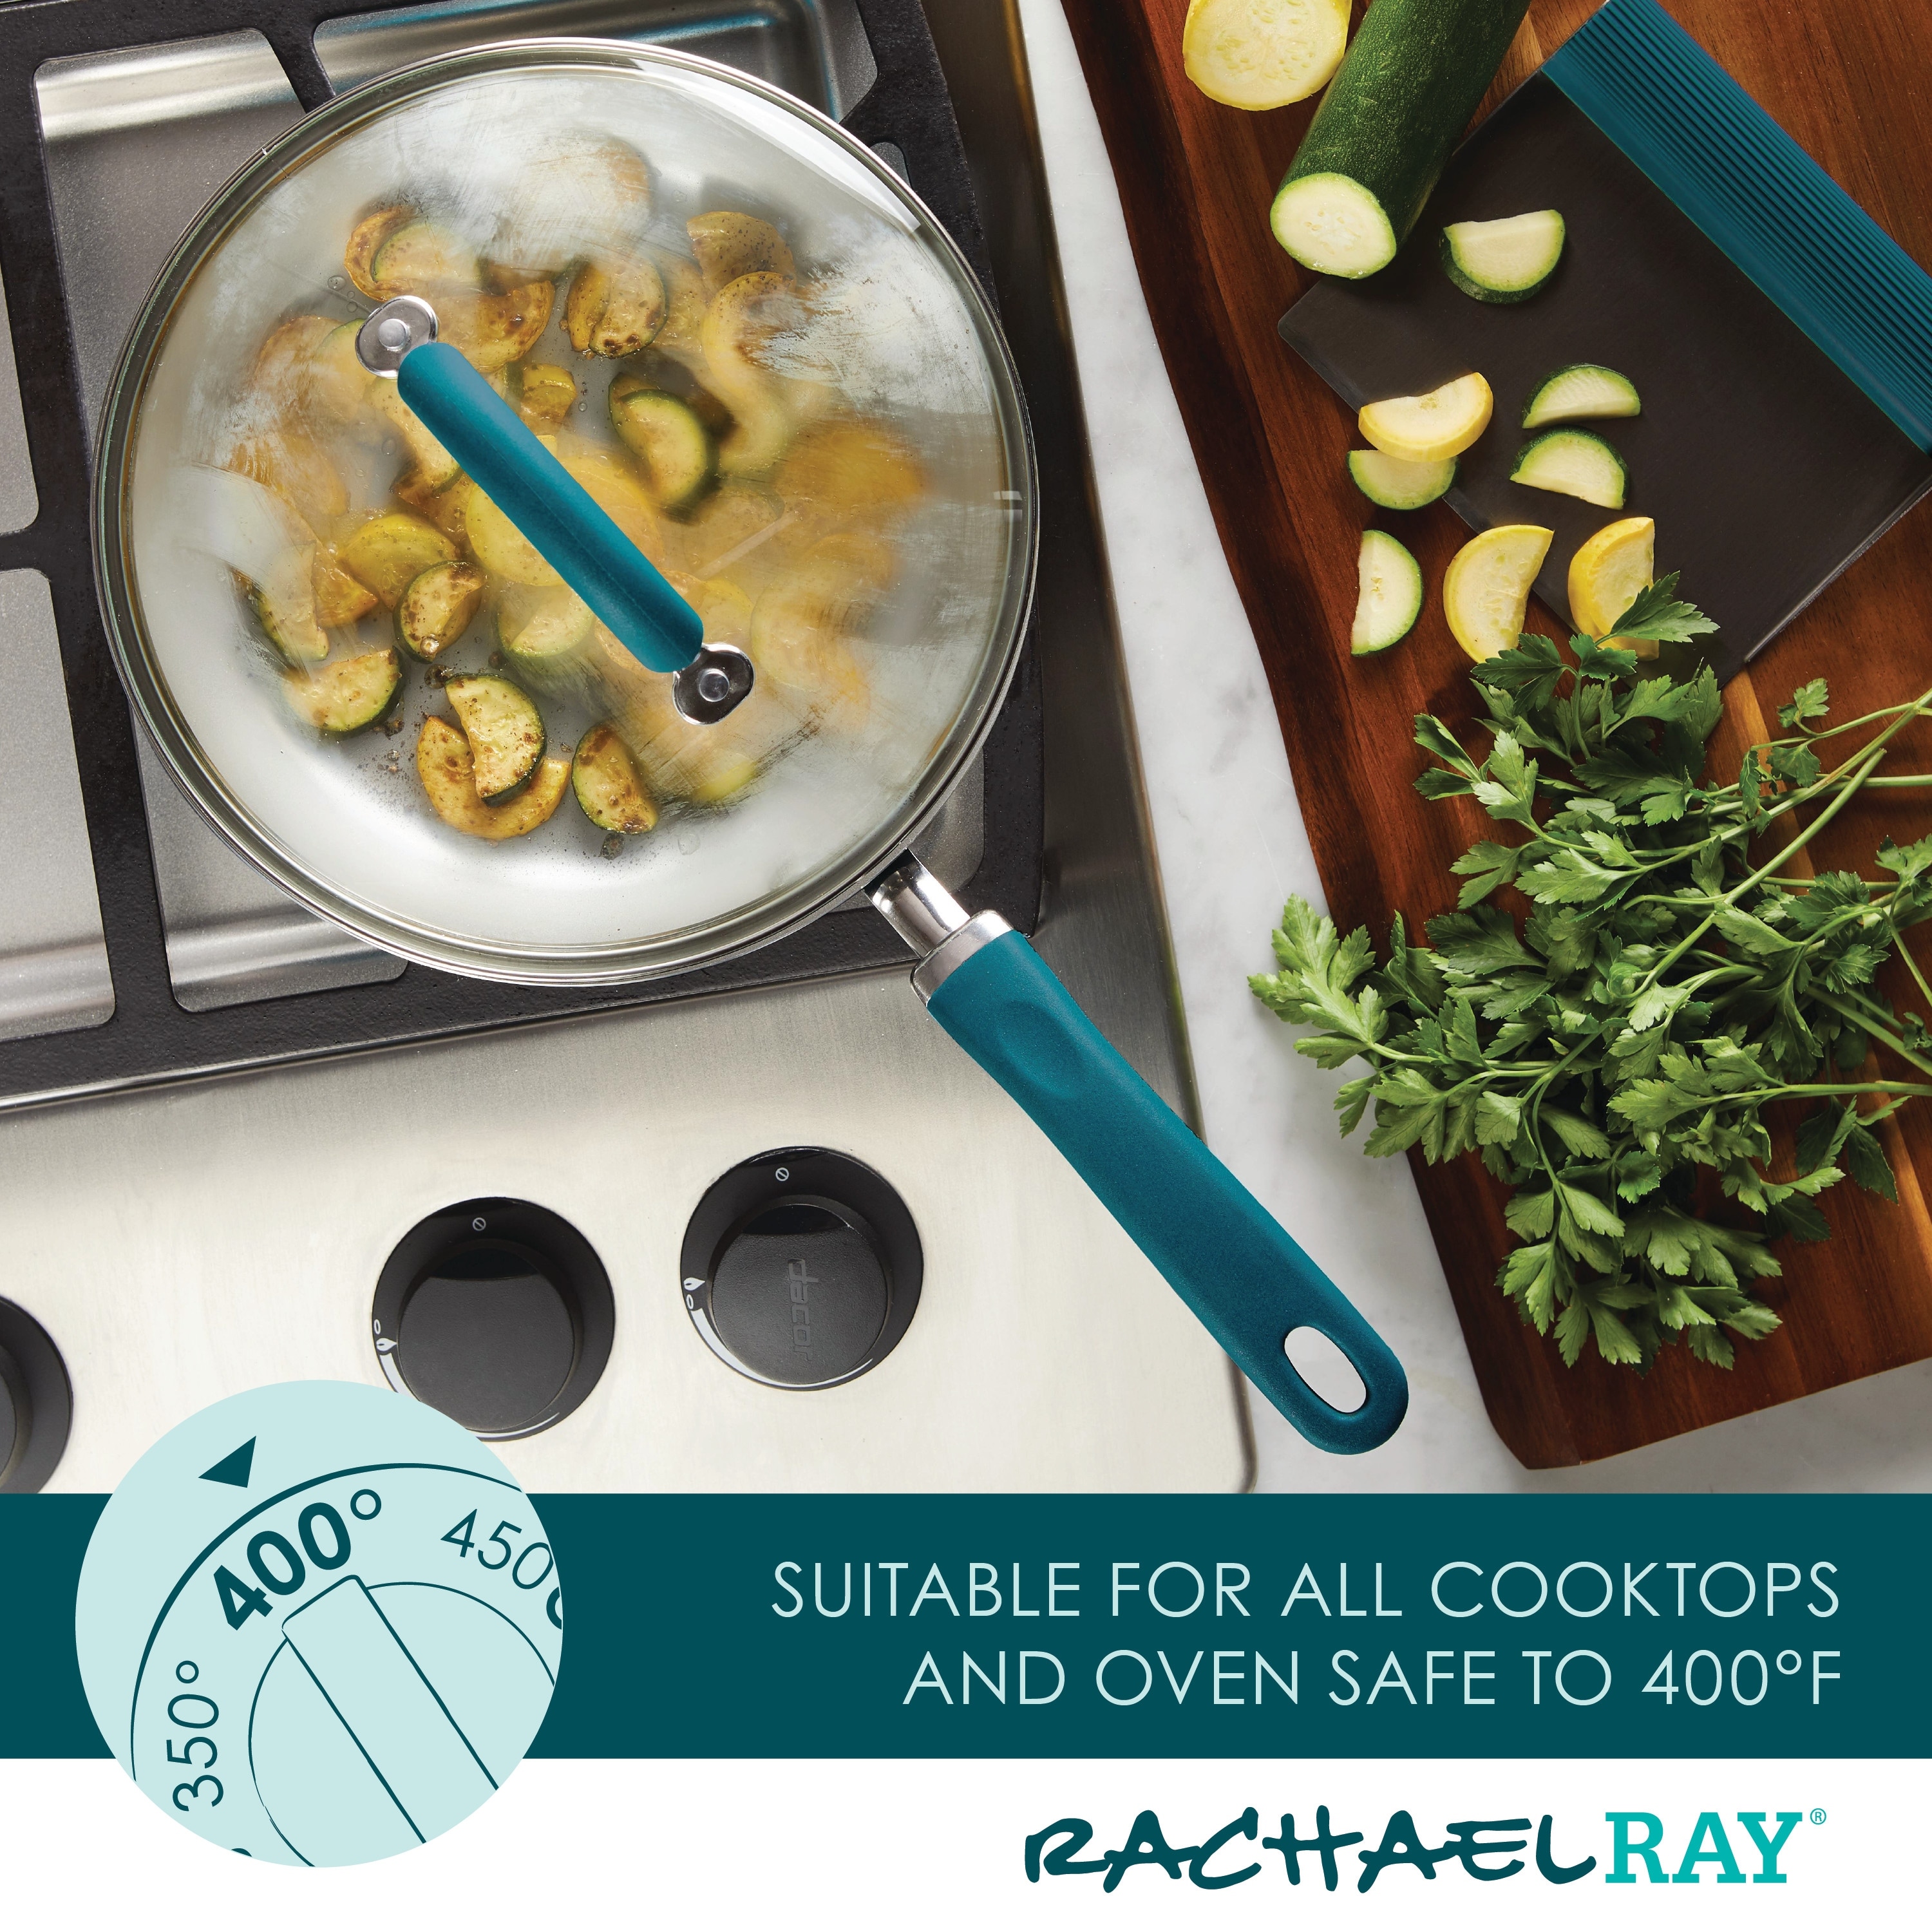 Rachael Ray Create Delicious 9.5 Inch Nonstick Deep Fry Pan, Light